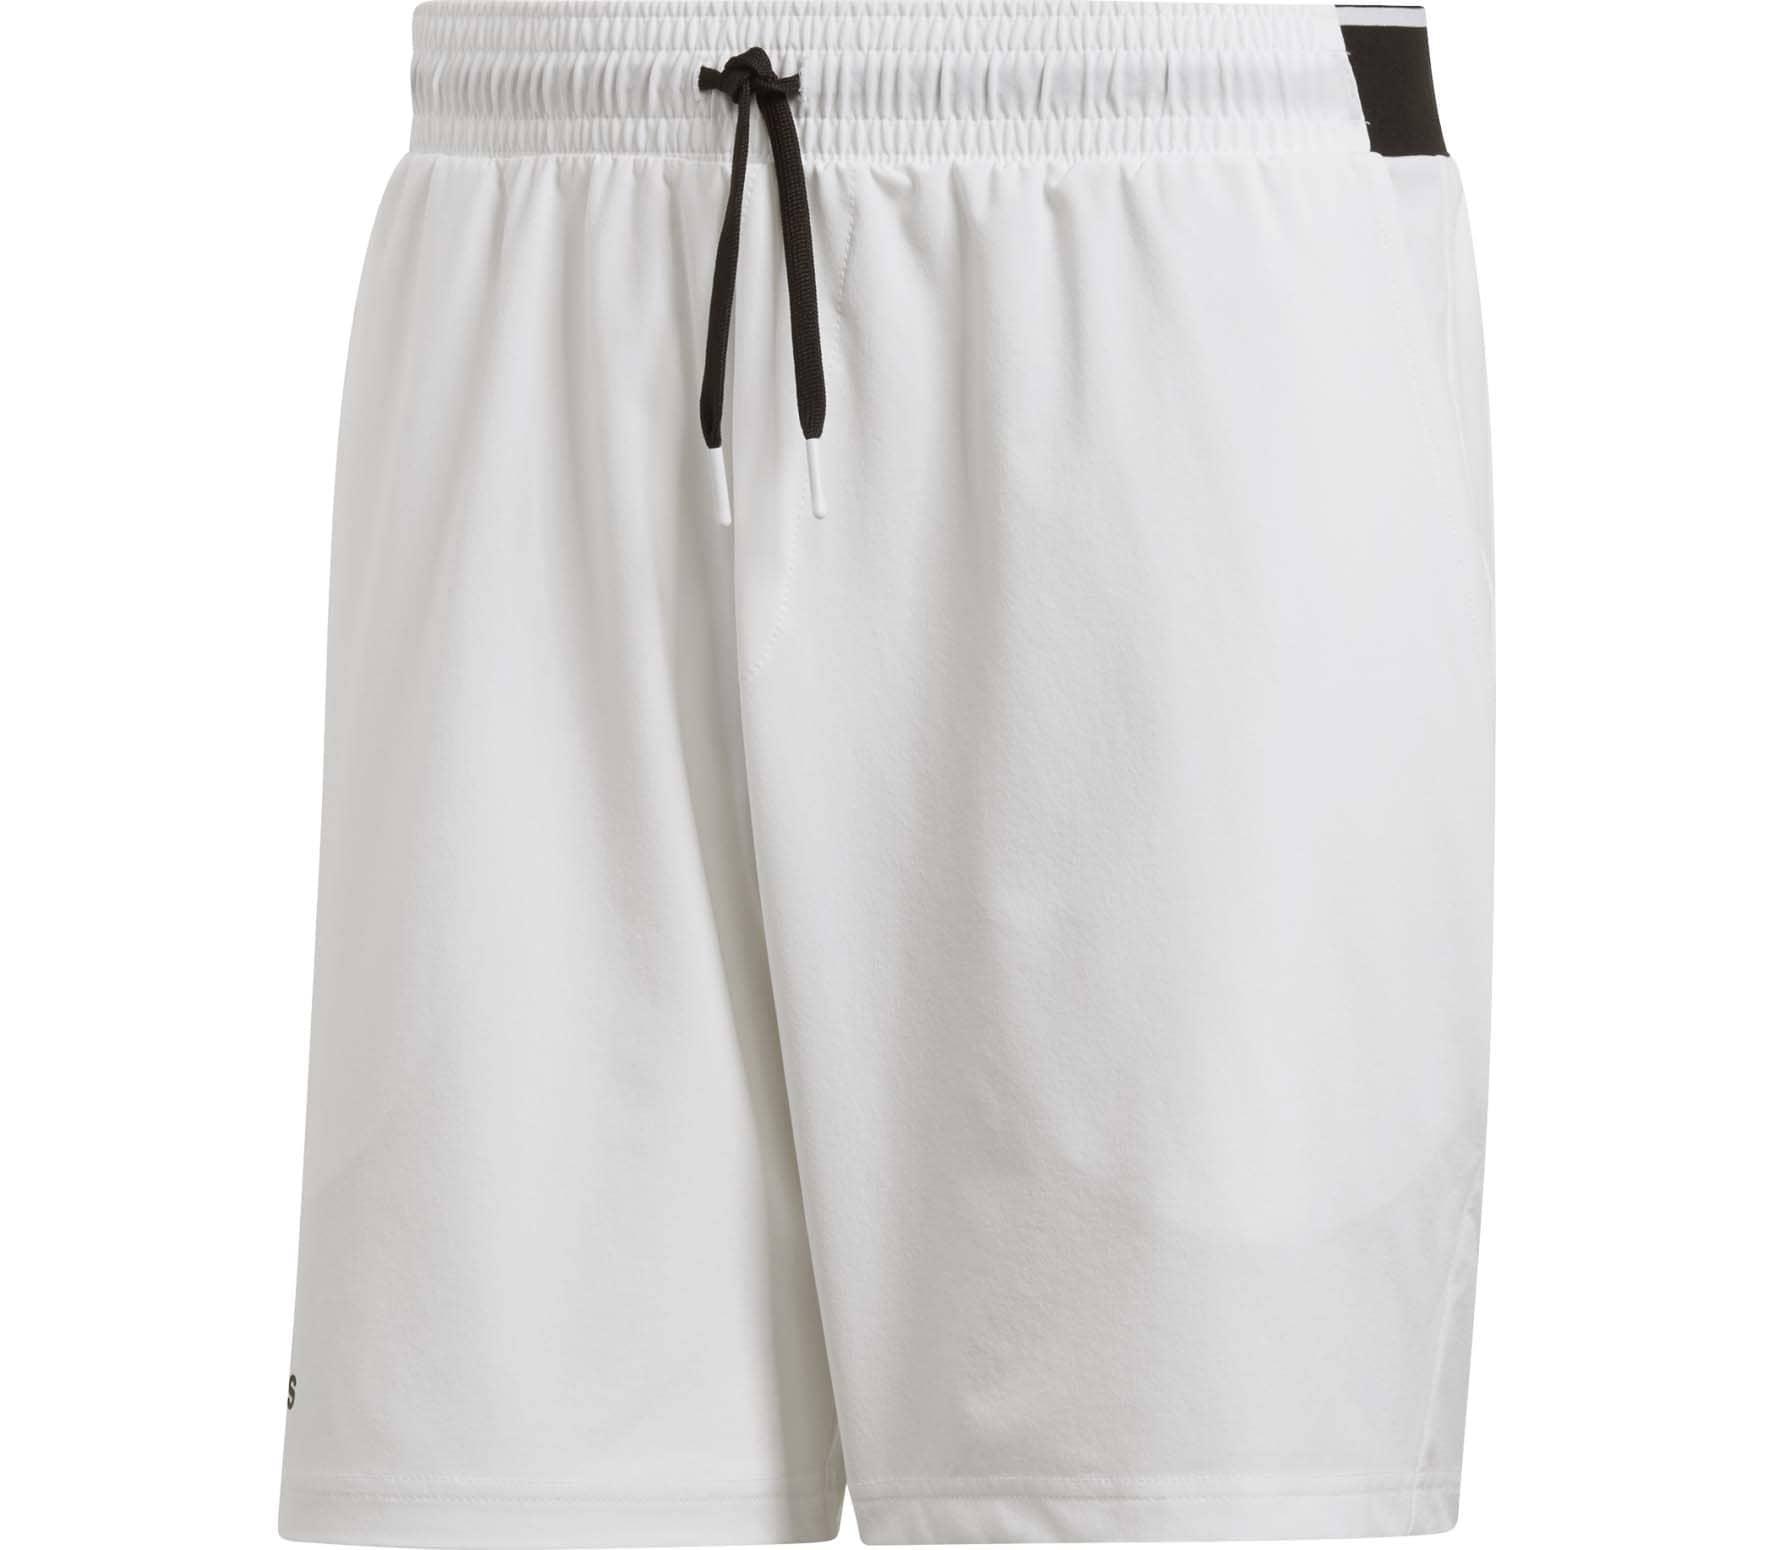 white adidas mens shorts